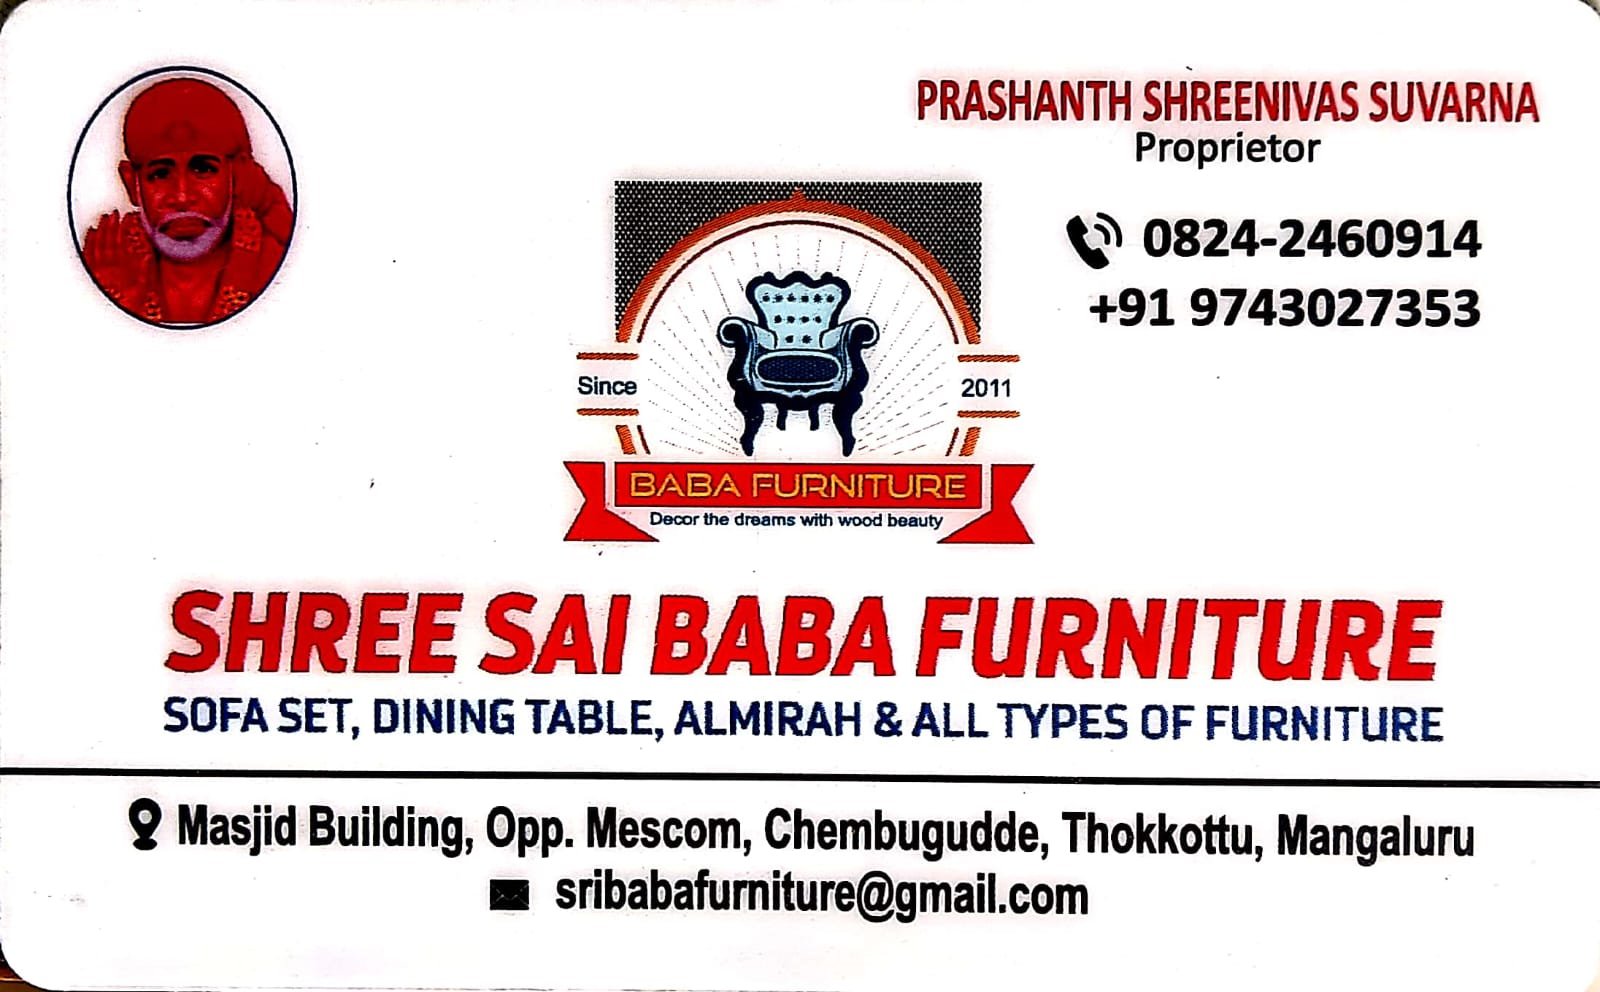 Shree Sai Baba Furniture